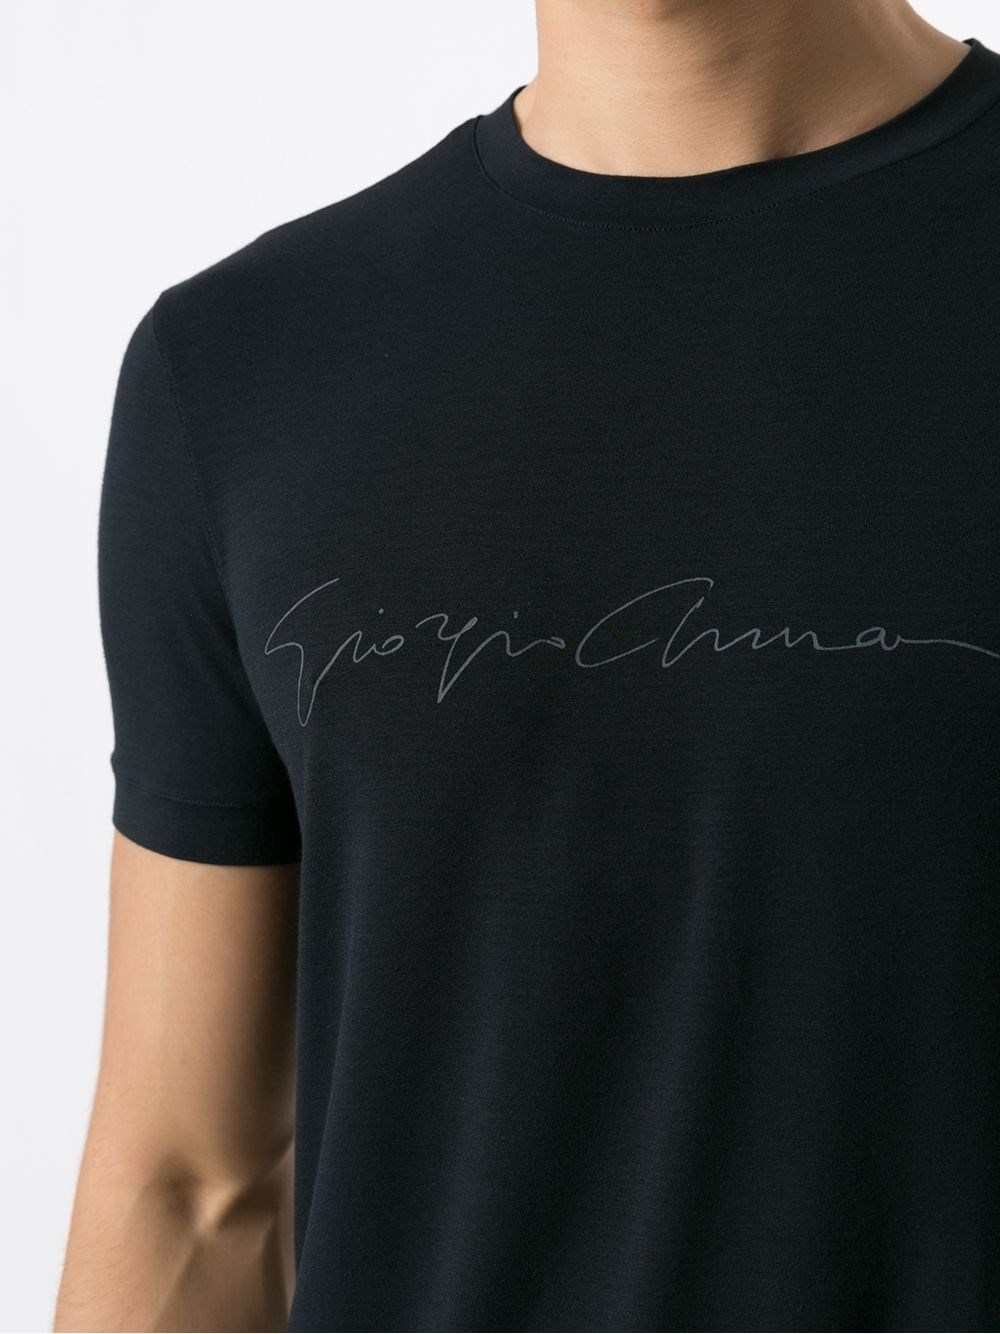 Giorgio armani T-shirt available on Monti Boutique - 51114